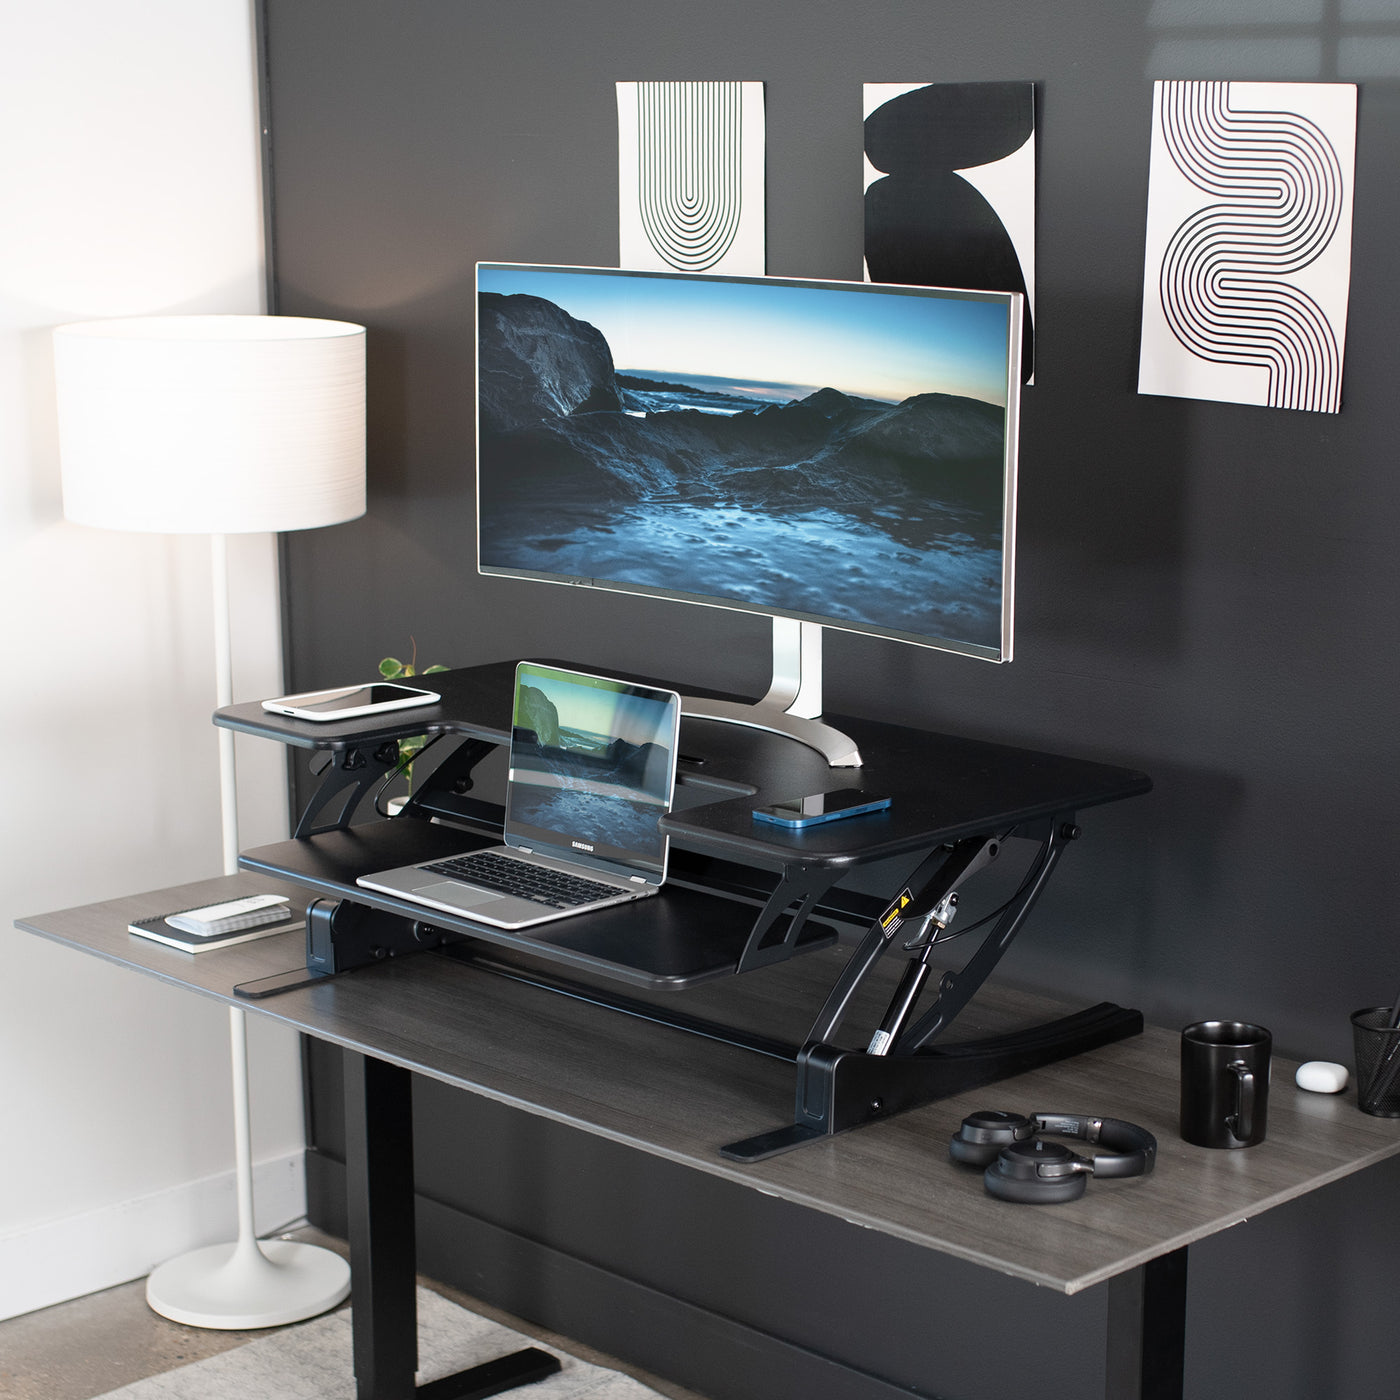 Modern desk riser on an office desk top holding several devices. 